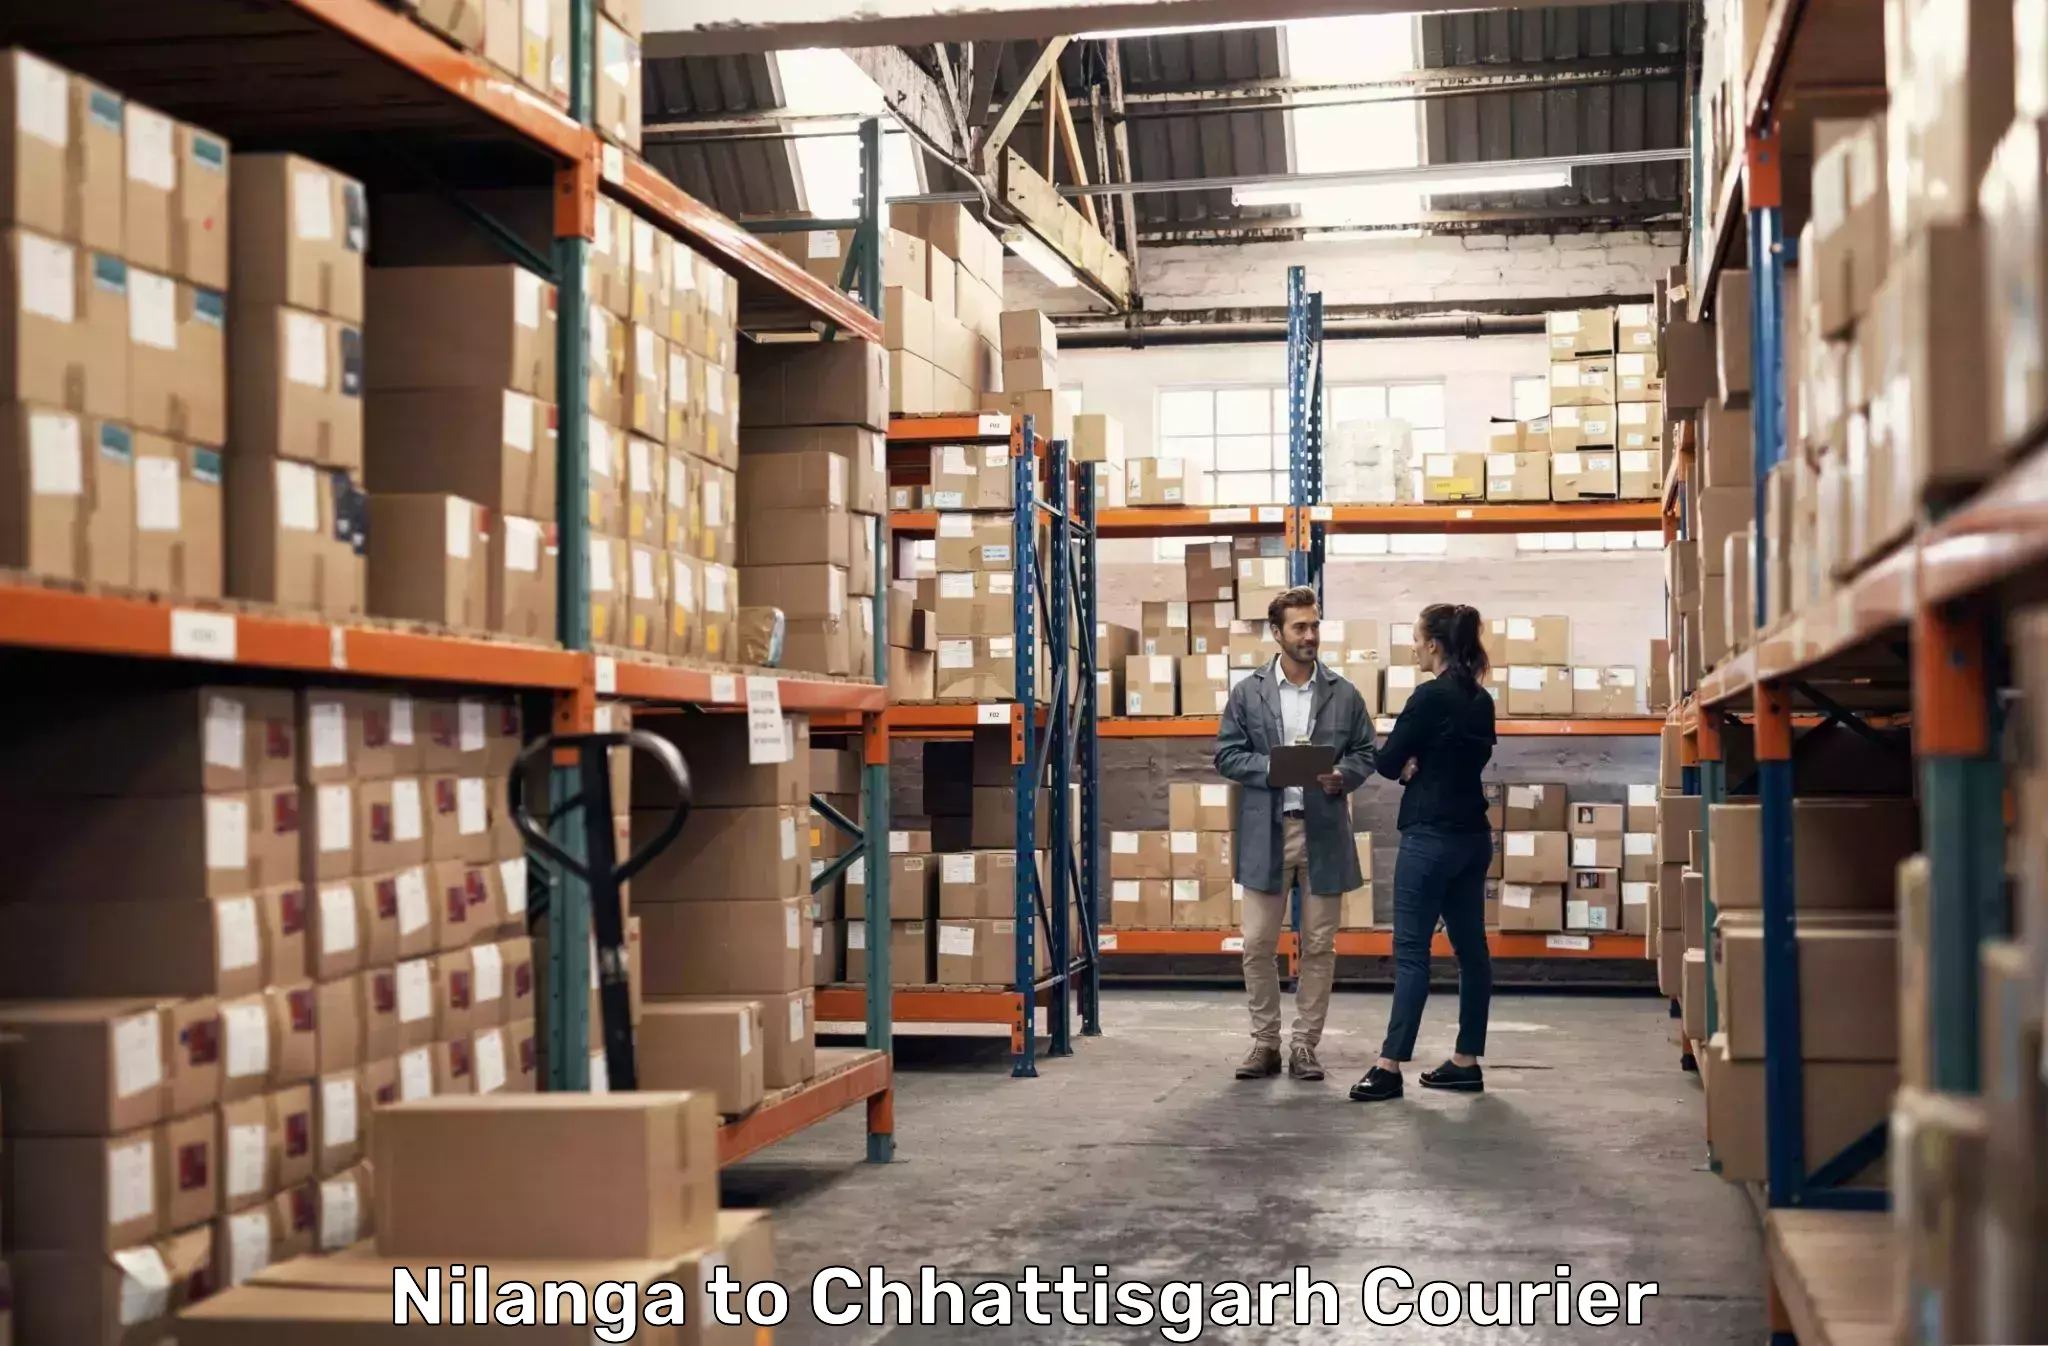 Express delivery network Nilanga to Chhattisgarh